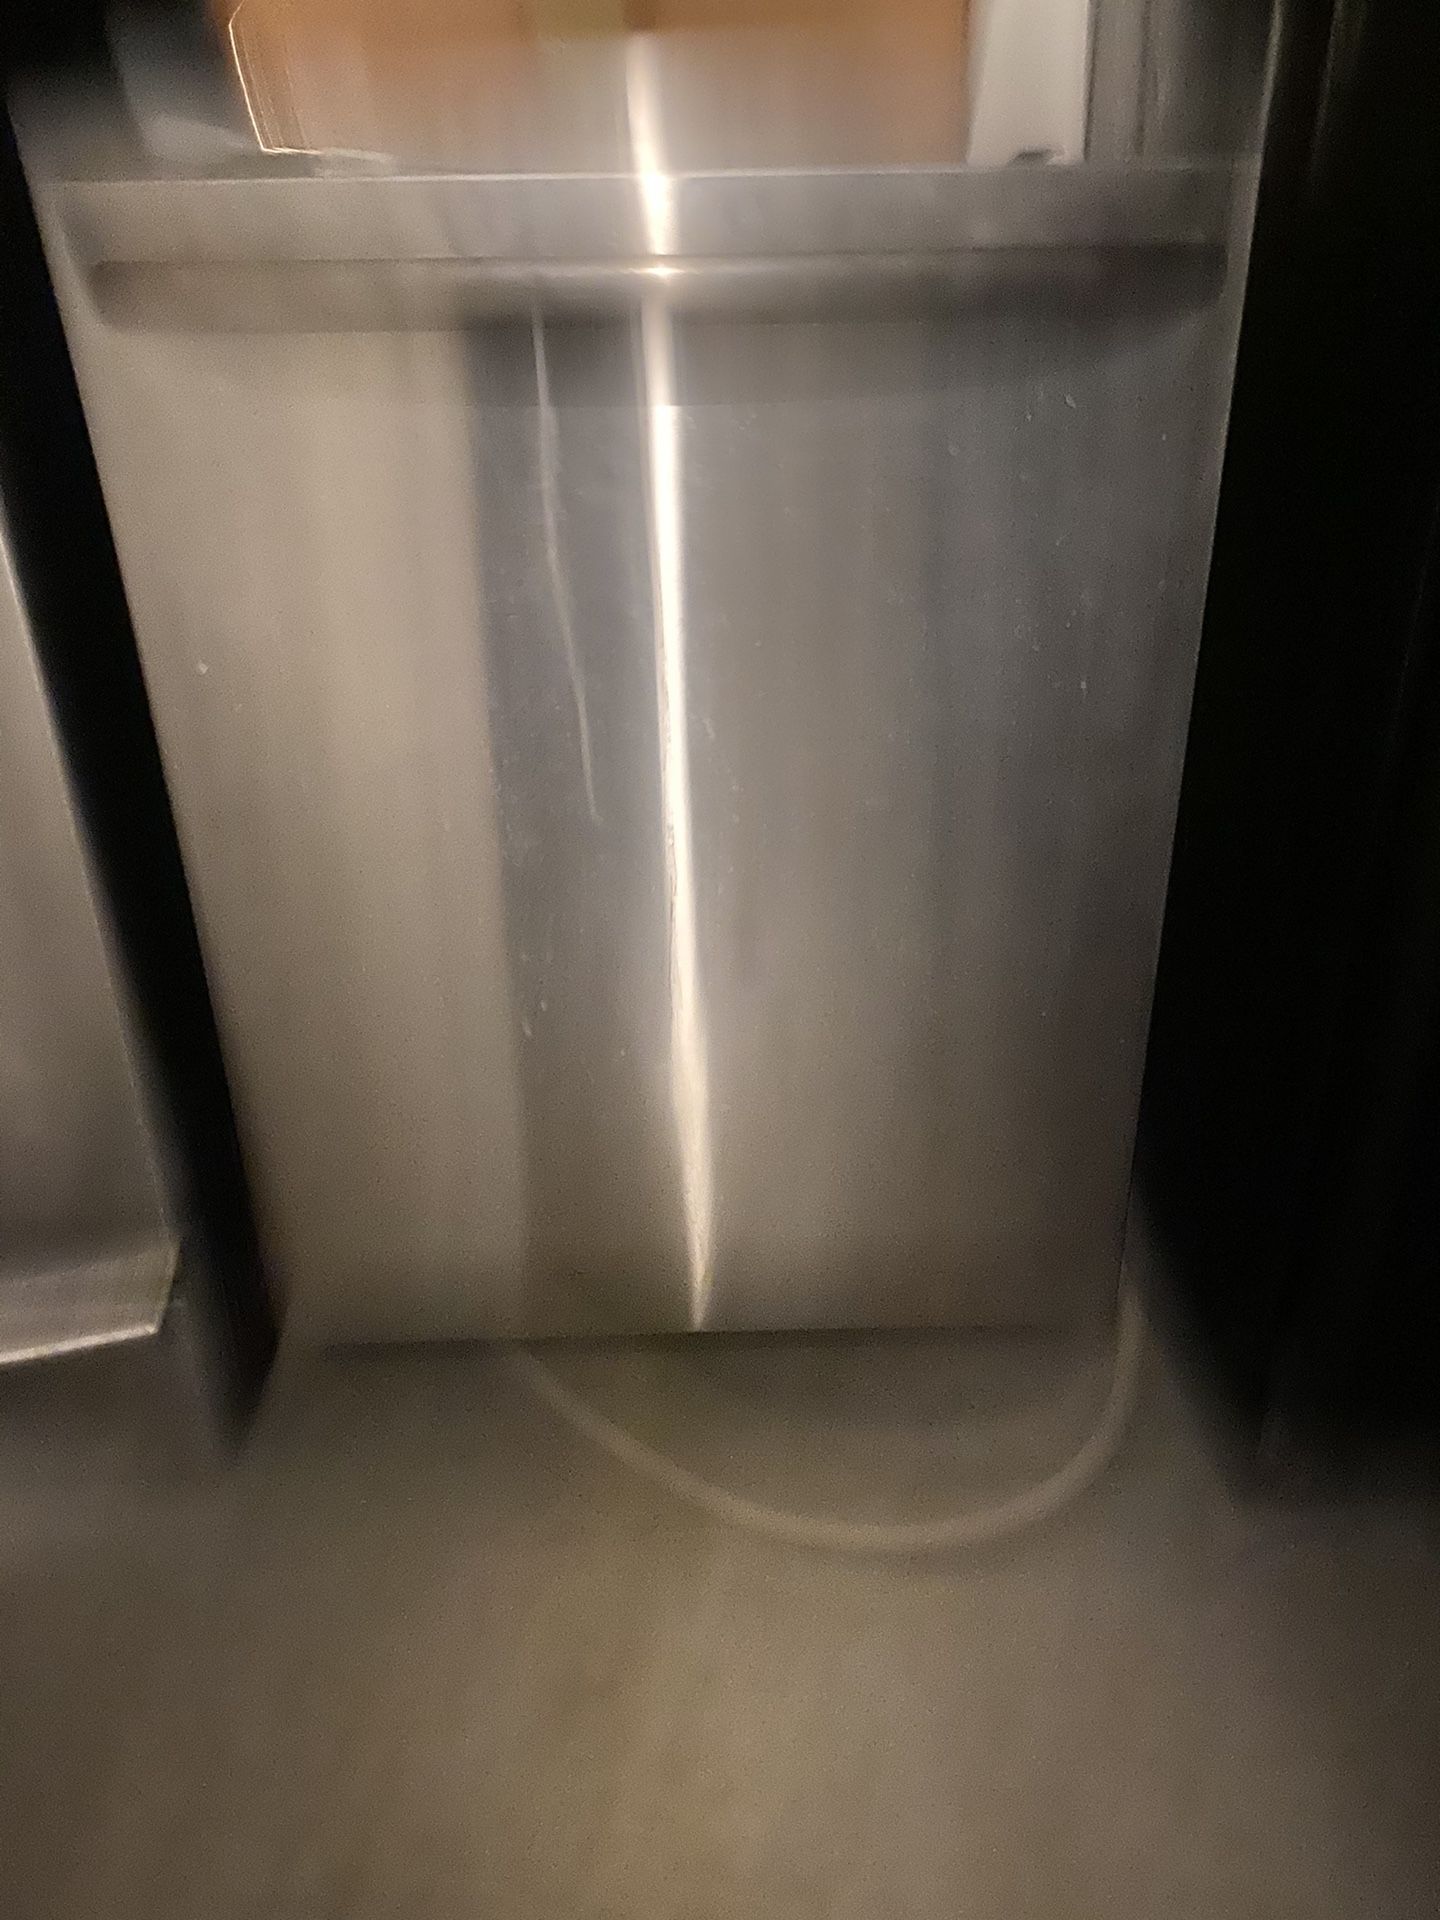 GE profile stainless steel dishwasher